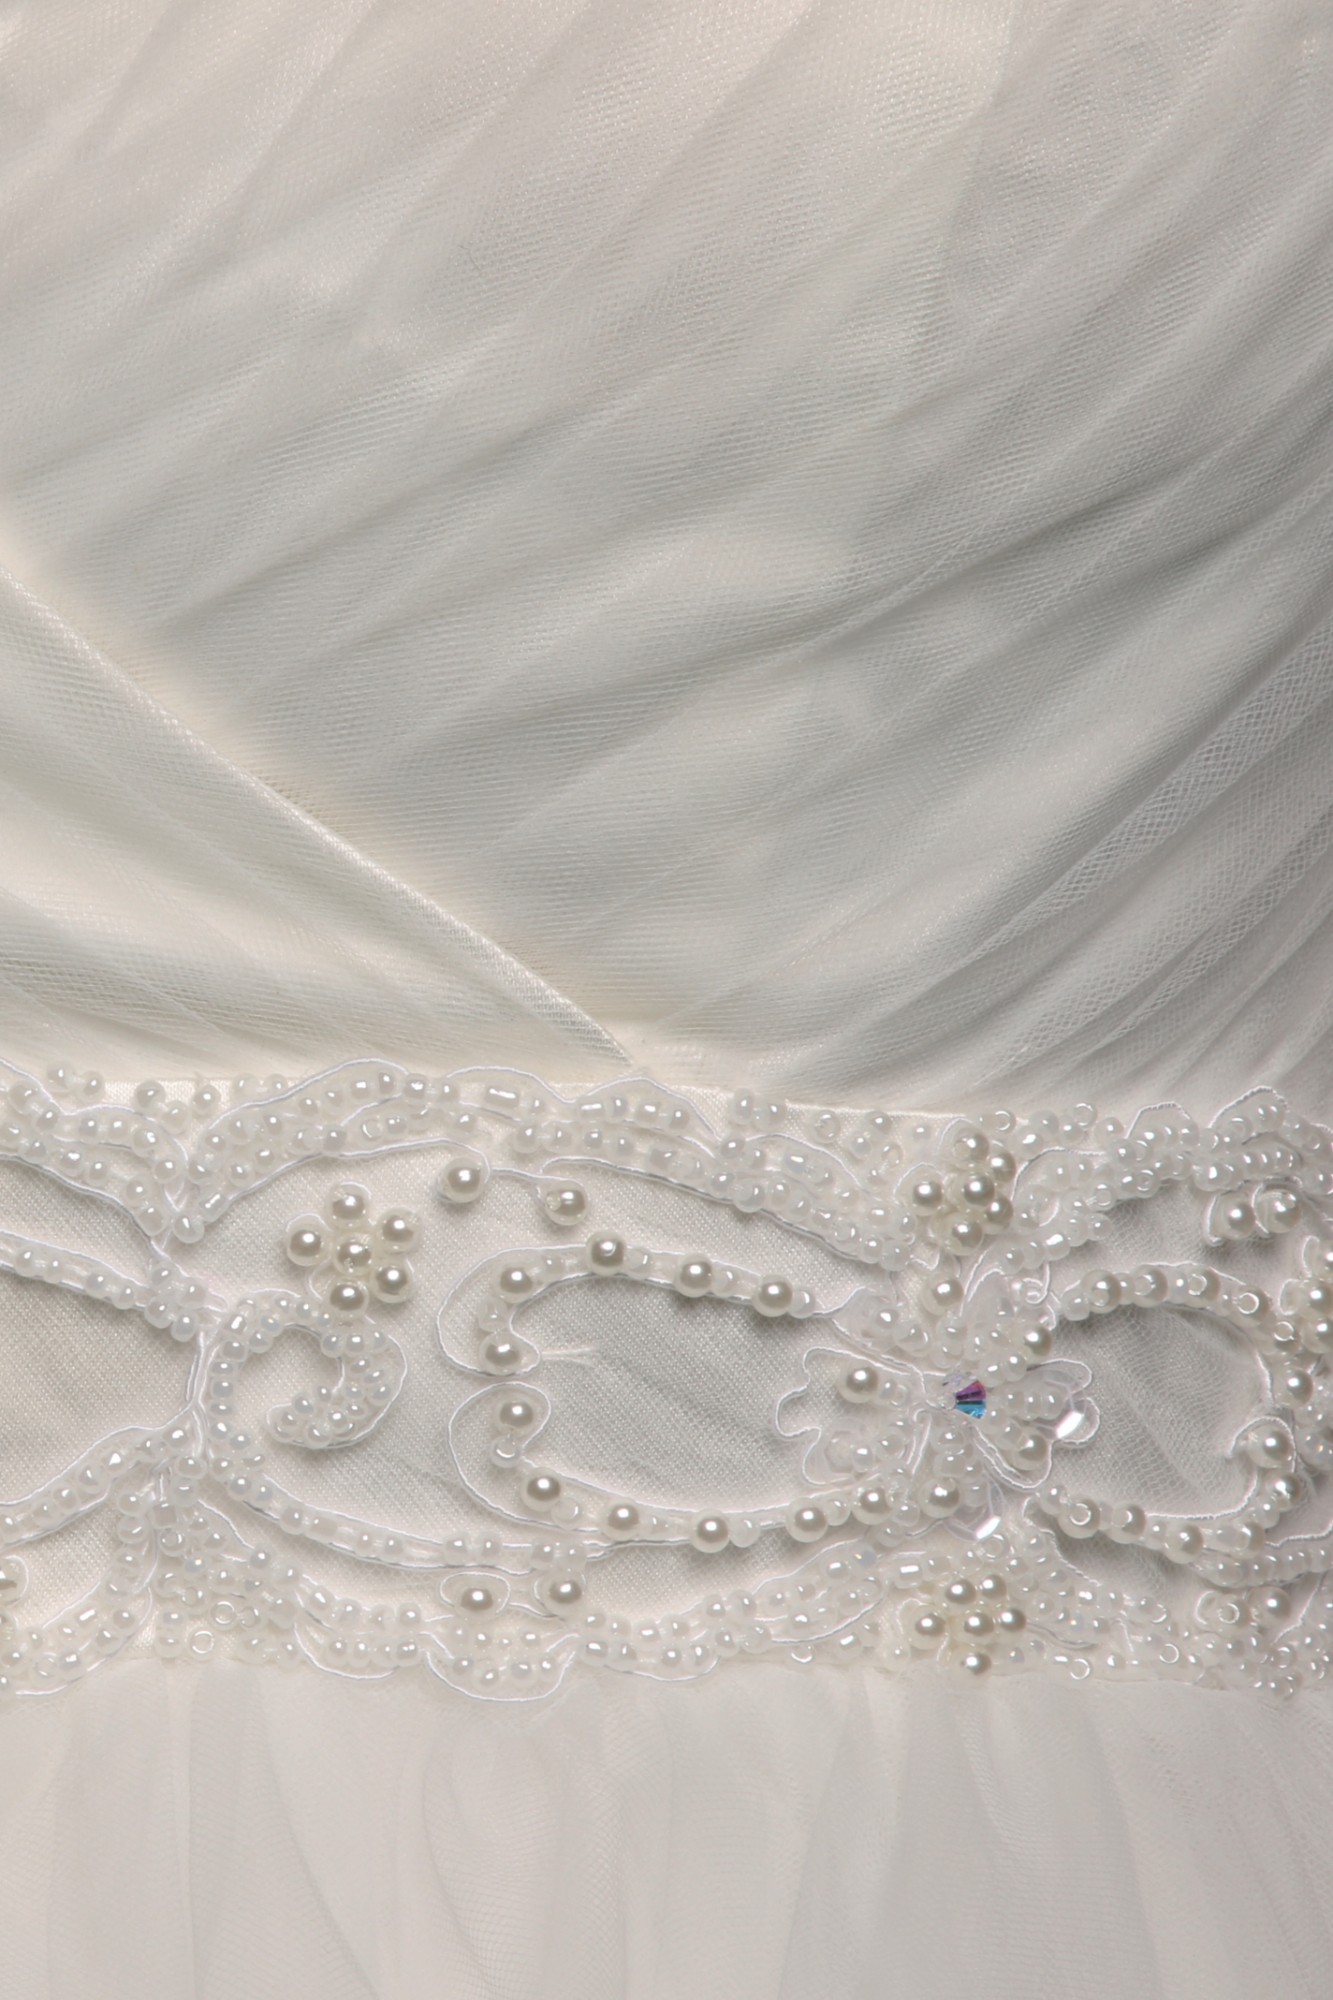 Robe de Coeur - Robe de mariée - Albi - Tarn - robe neuve - petit budget - destockage magasin